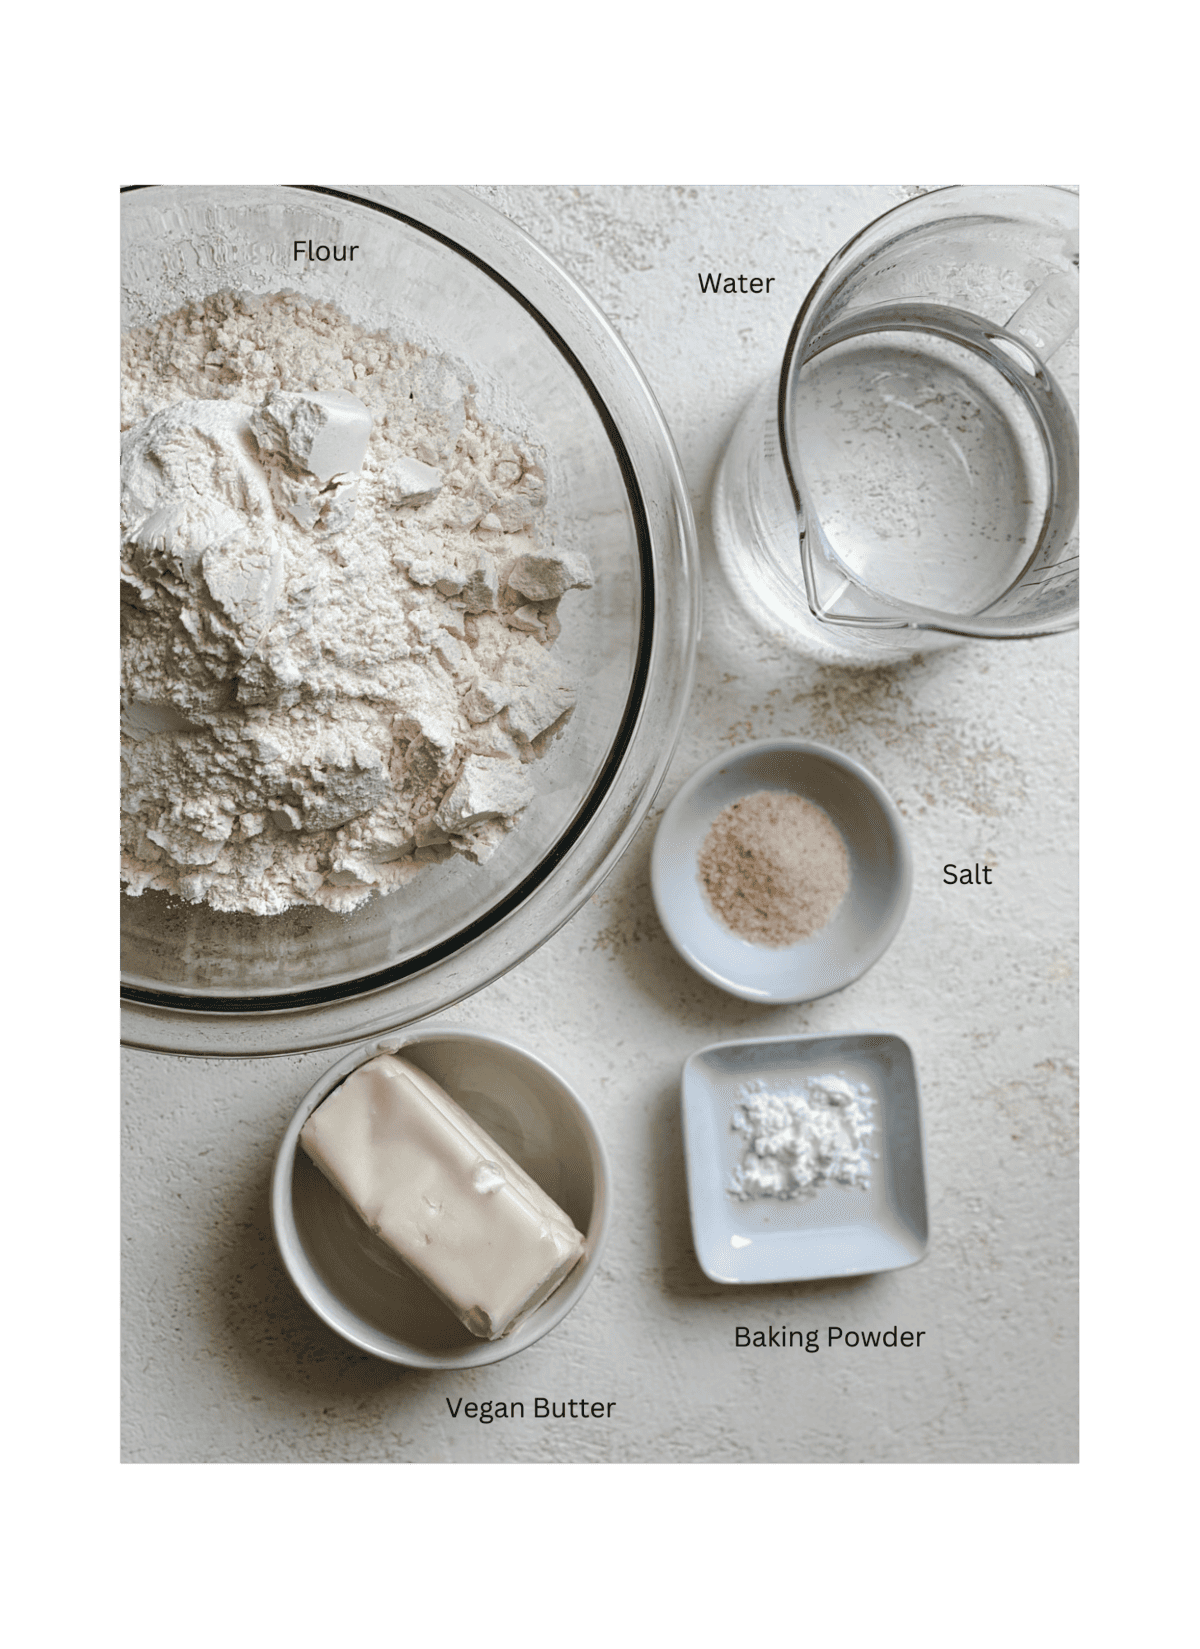 ingredients for Tortillas de Harina – Handmade Flour Tortillas against a whtie surface